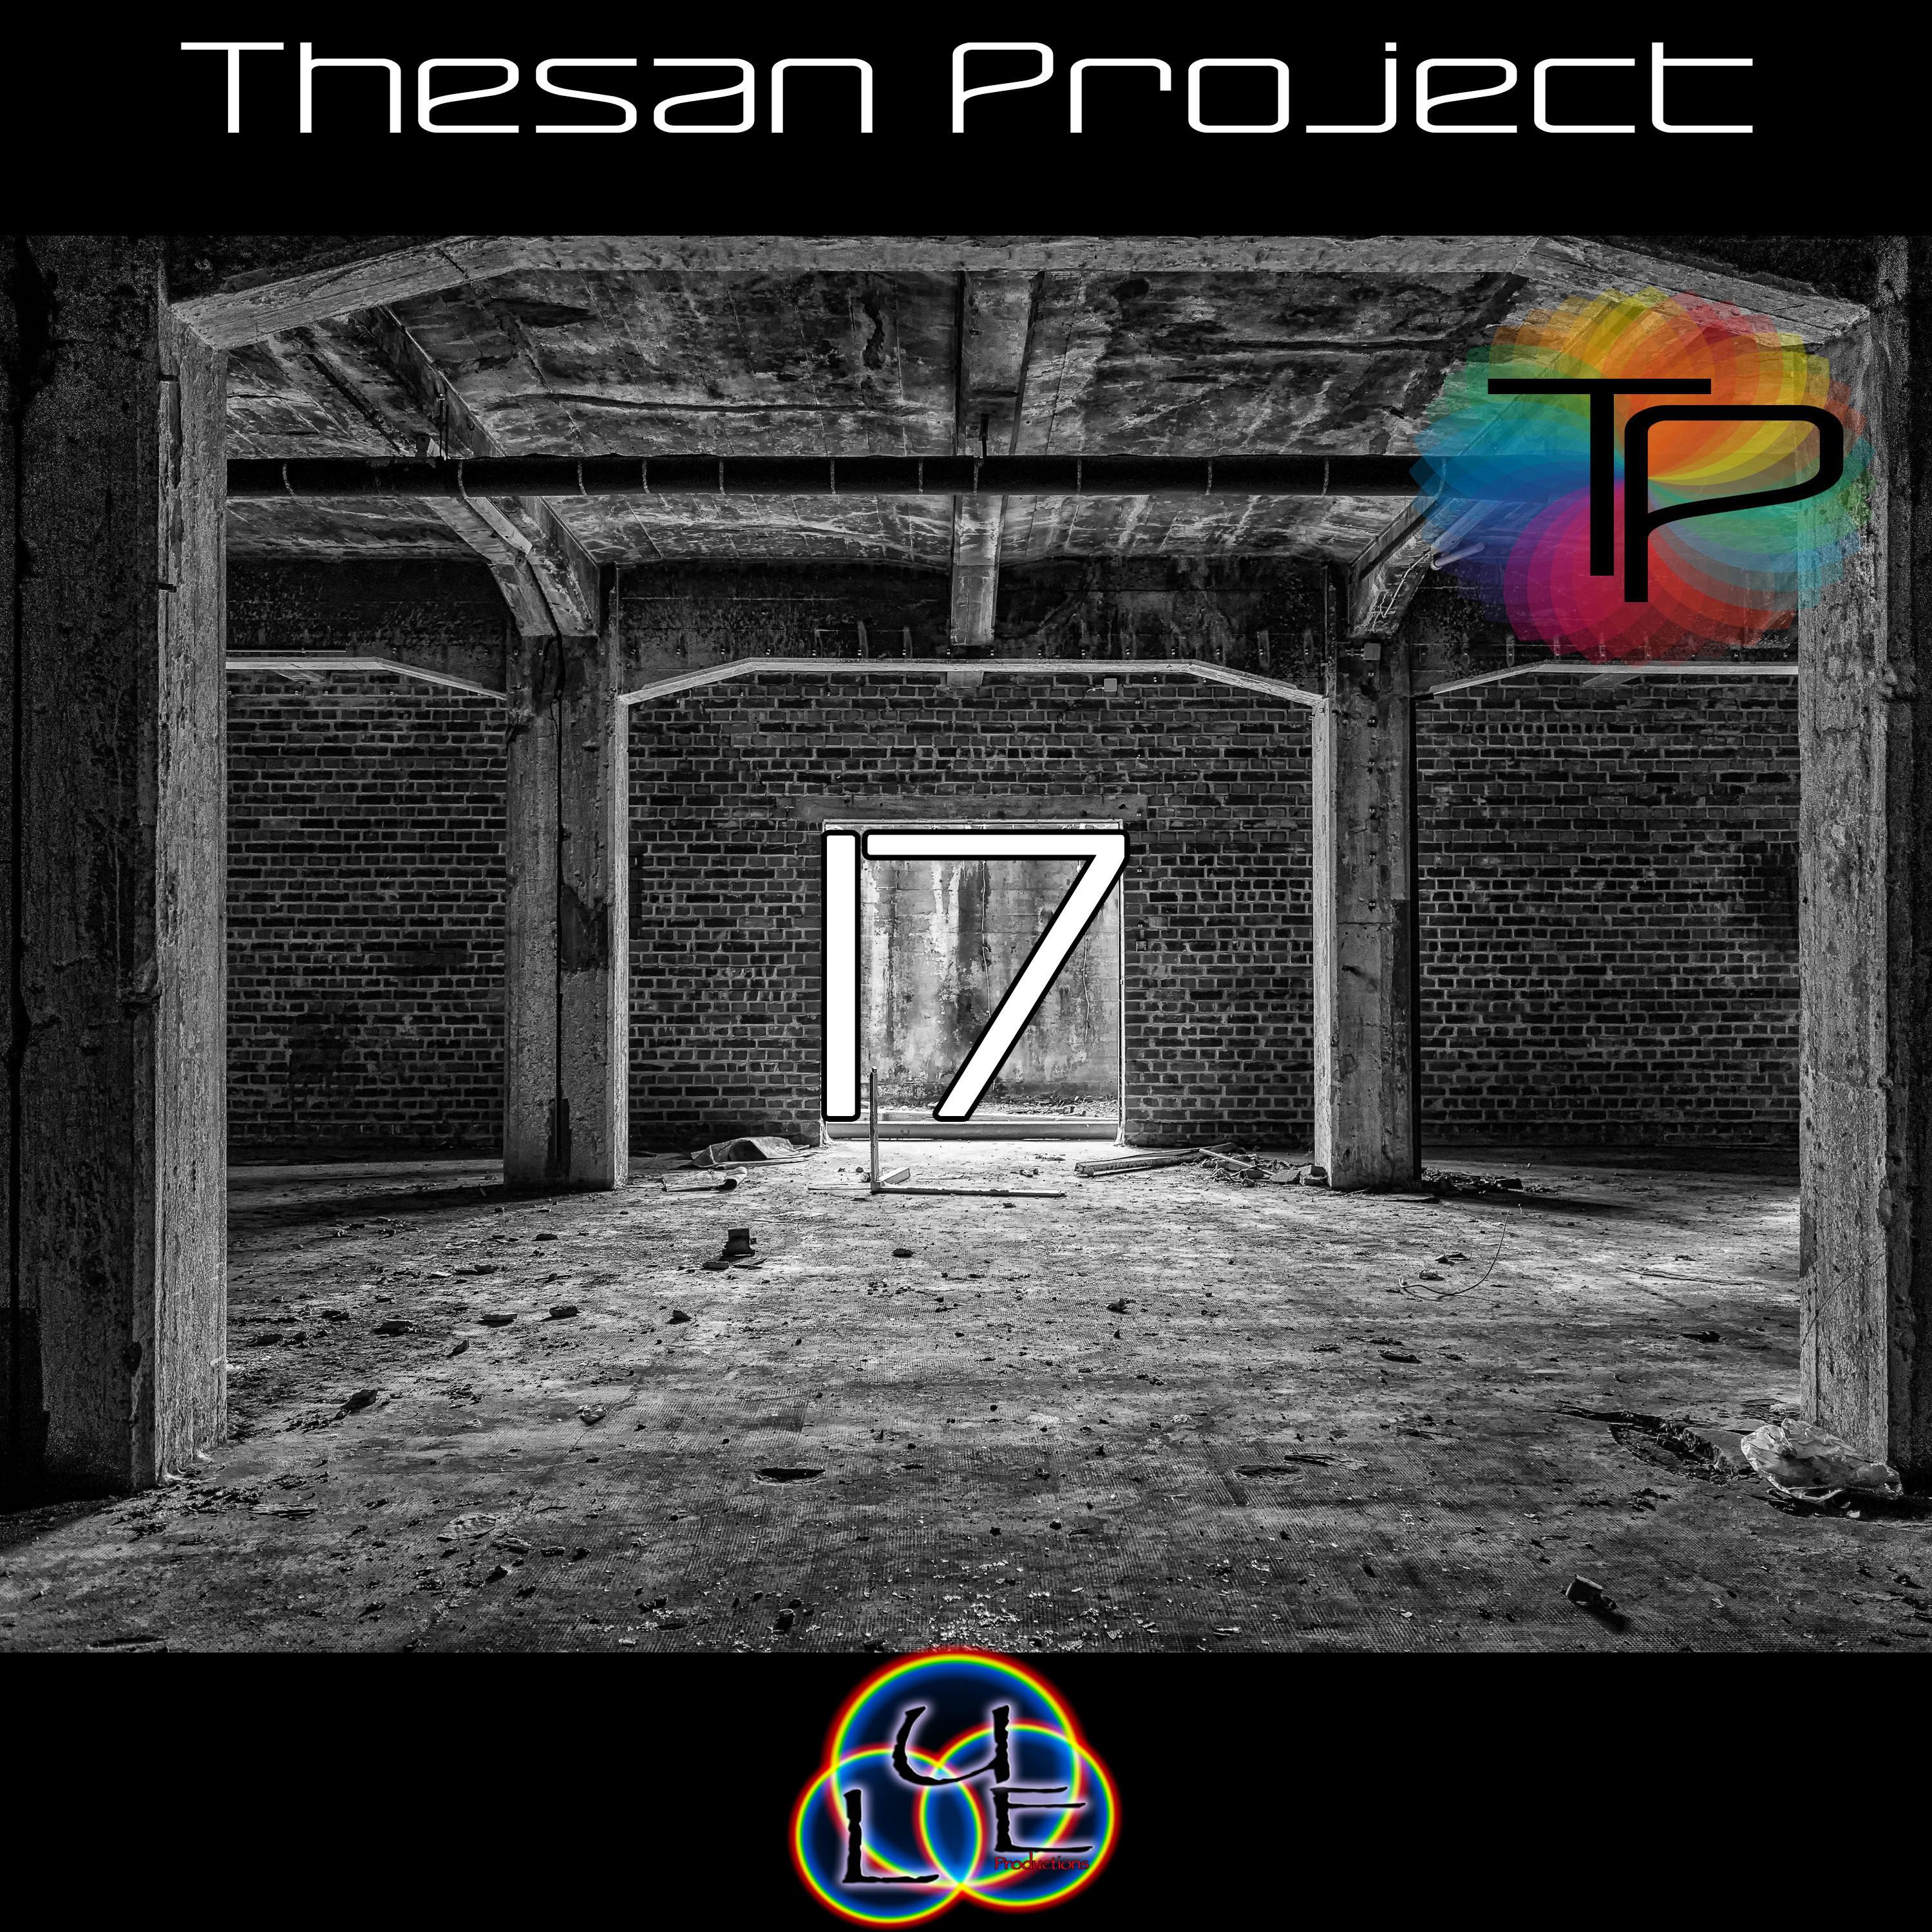 Thesan Project - Mediterranean Sundance 17 (Edit)